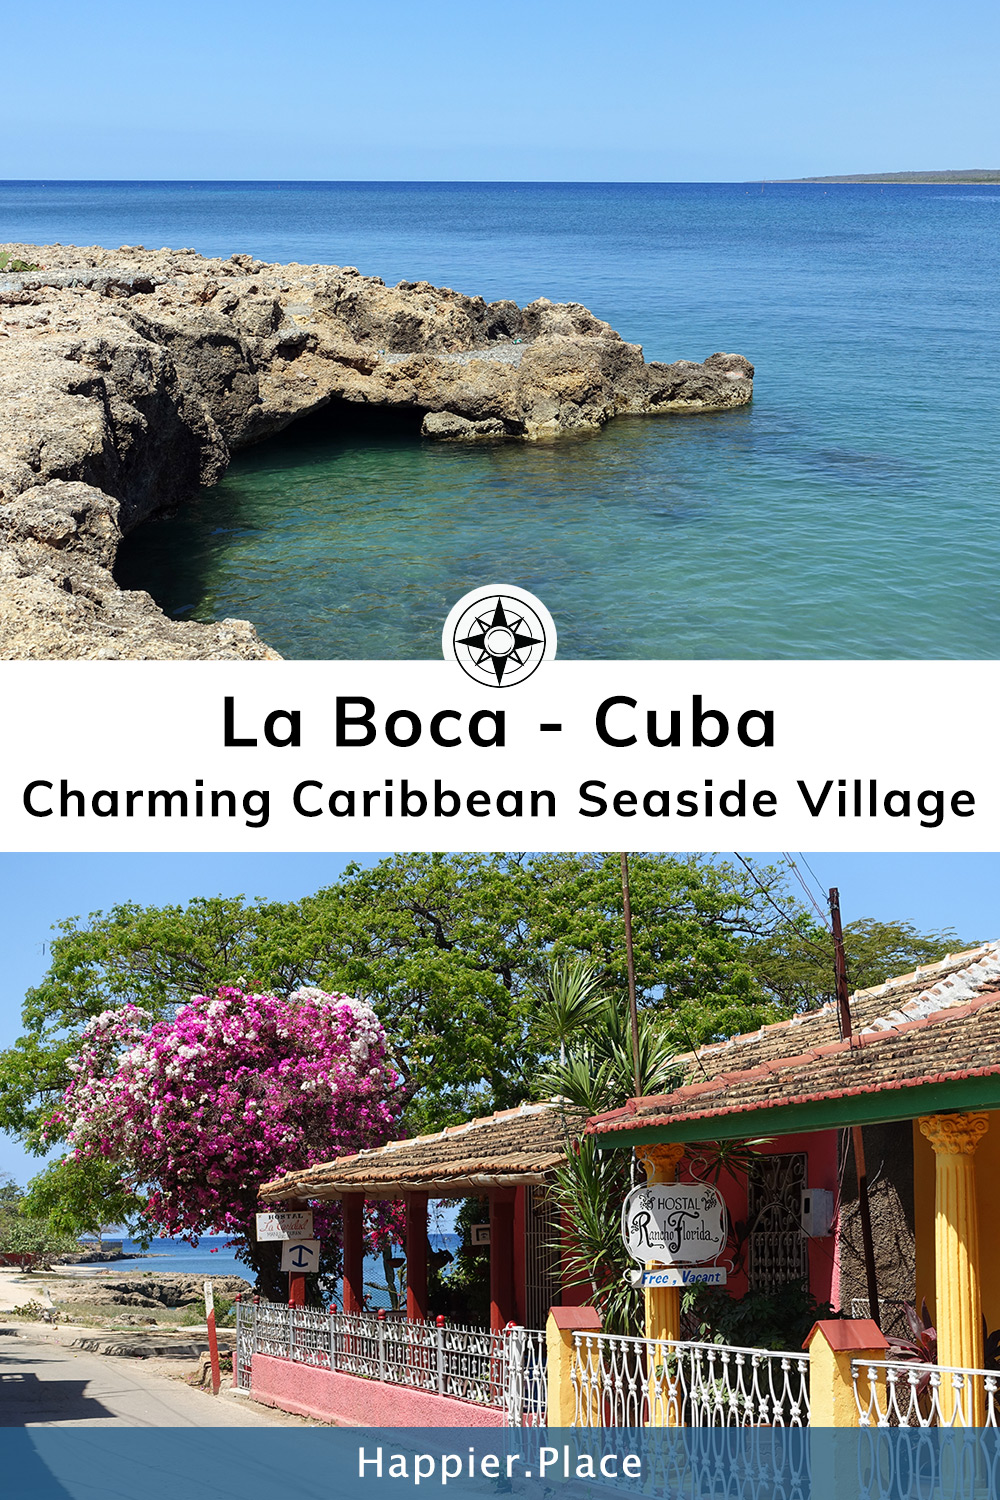 Charming Caribbean Seaside Village La Boca, Cuba.